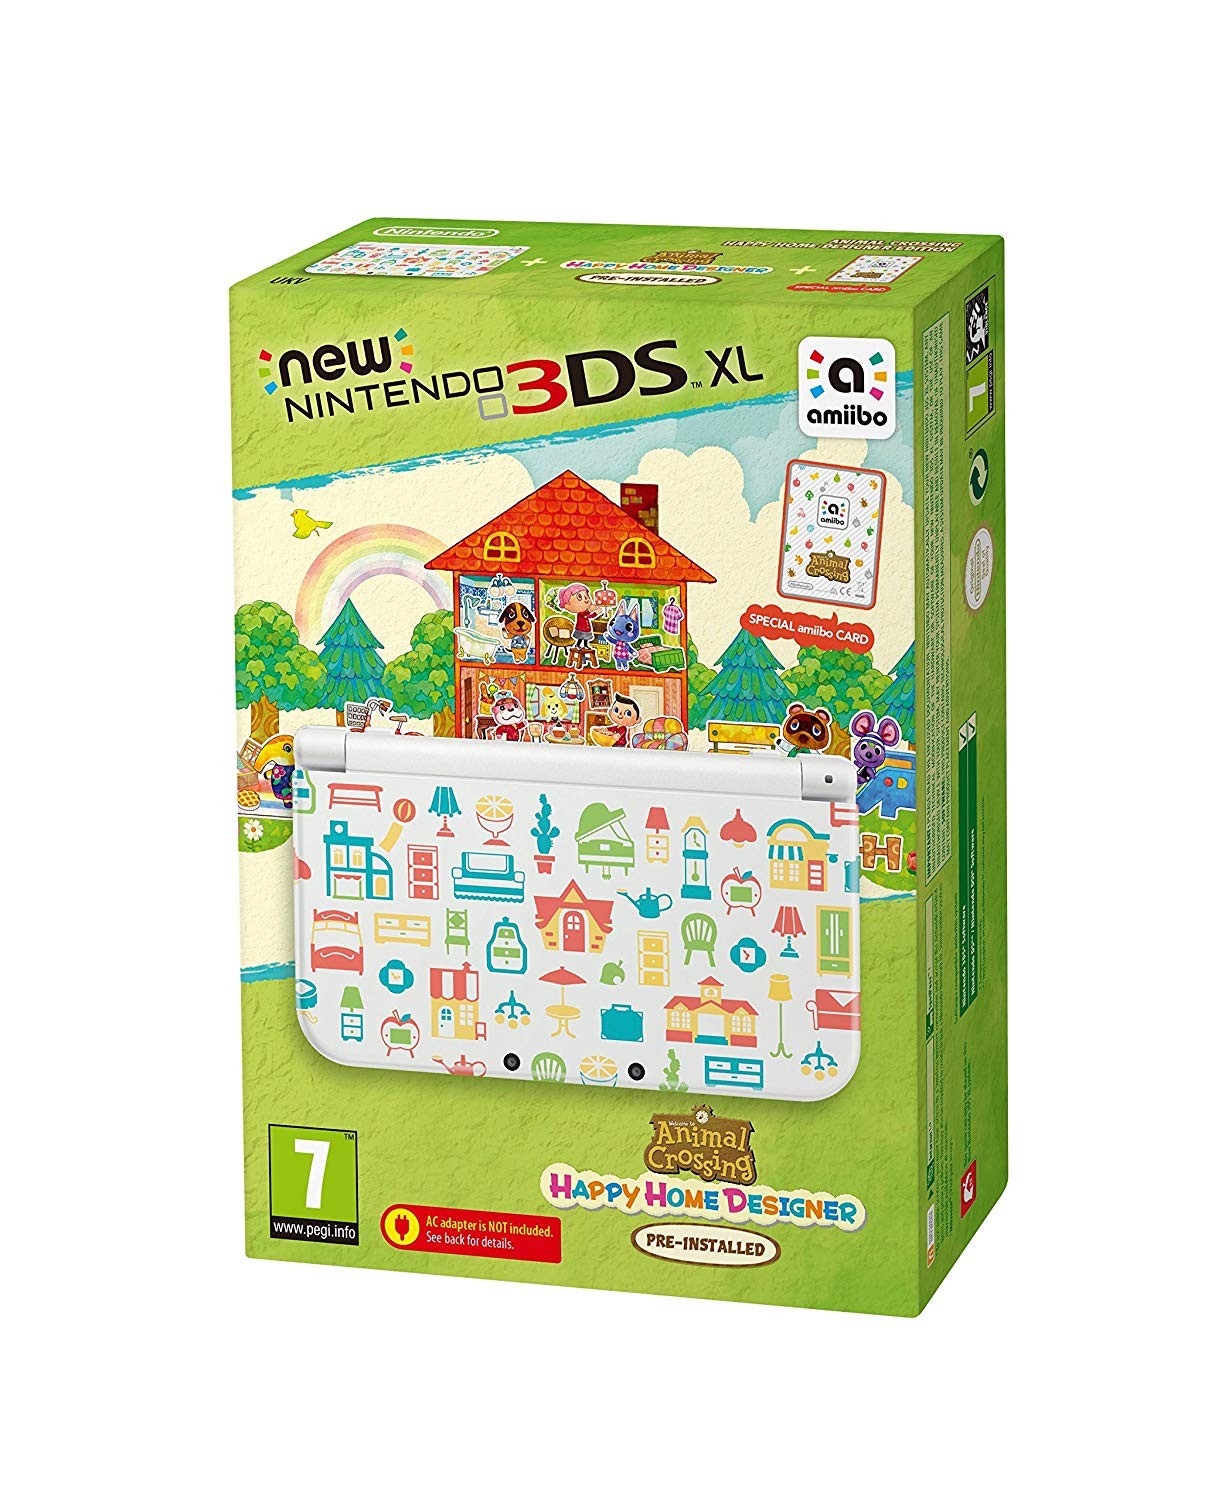 New Nintendo 3DS XL Animal Crossing: Happy Home Designer (Boxed)